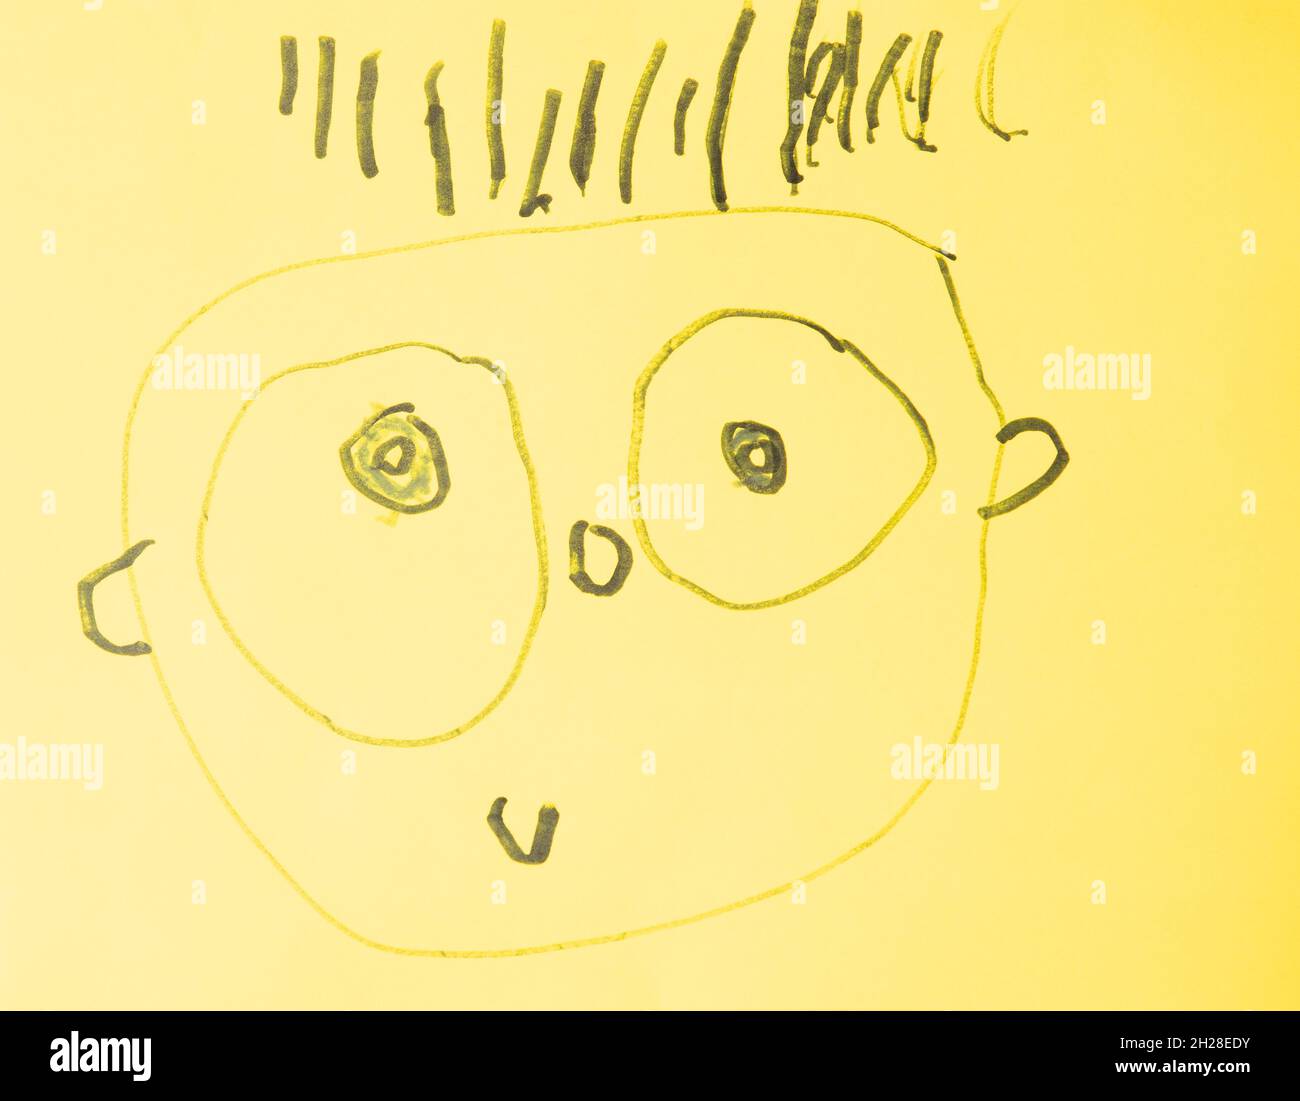 Education Preschool 4-5 year olds children's artwork depicting person, recognizable human figure Stock Photo